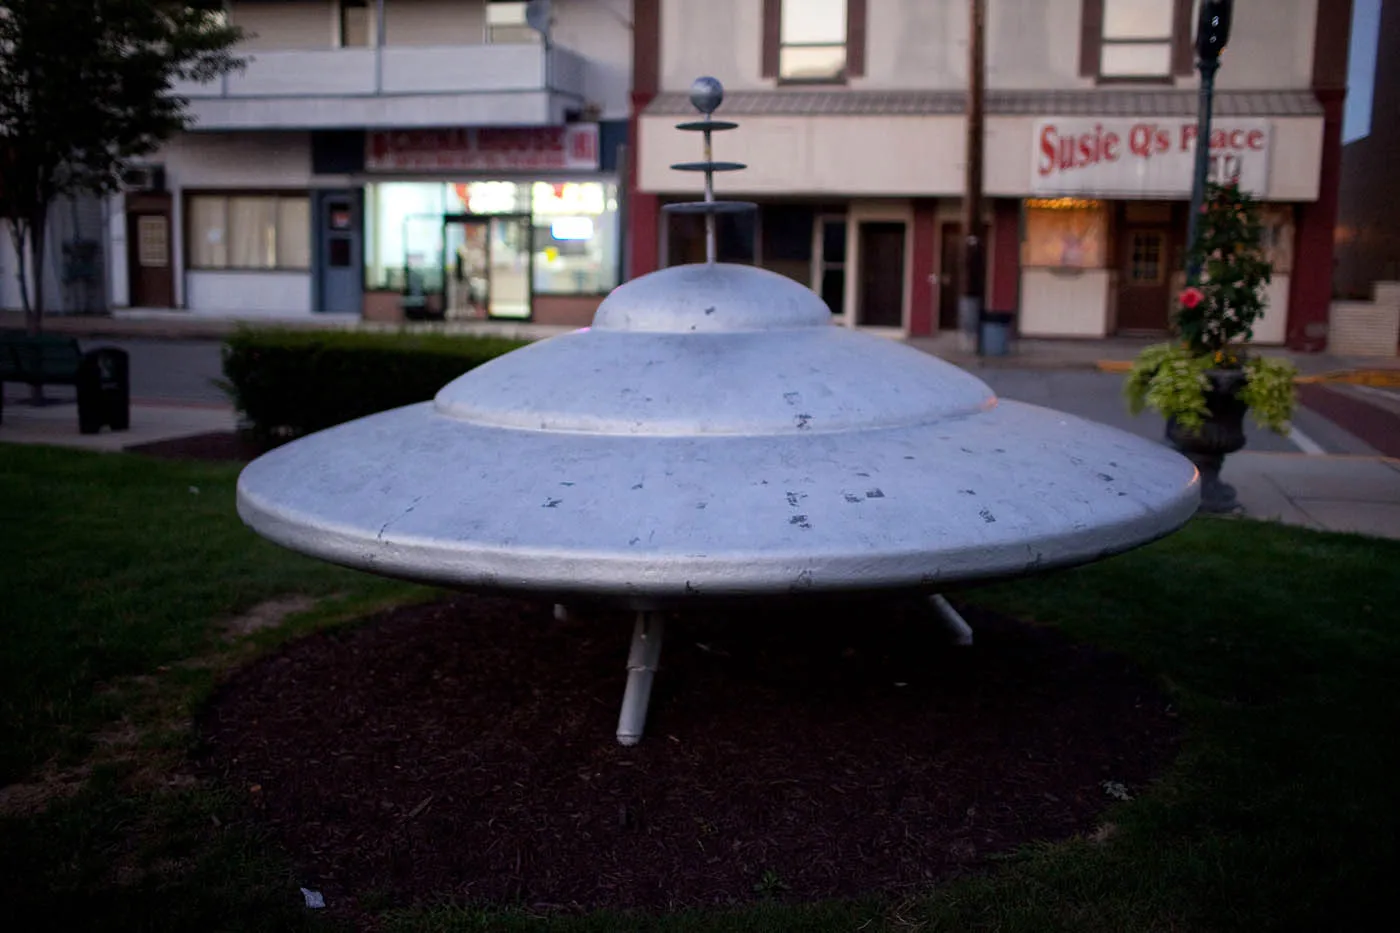 Flying Saucer in Mars, Pennsylvania - Pennsylvania Roadside Attractions